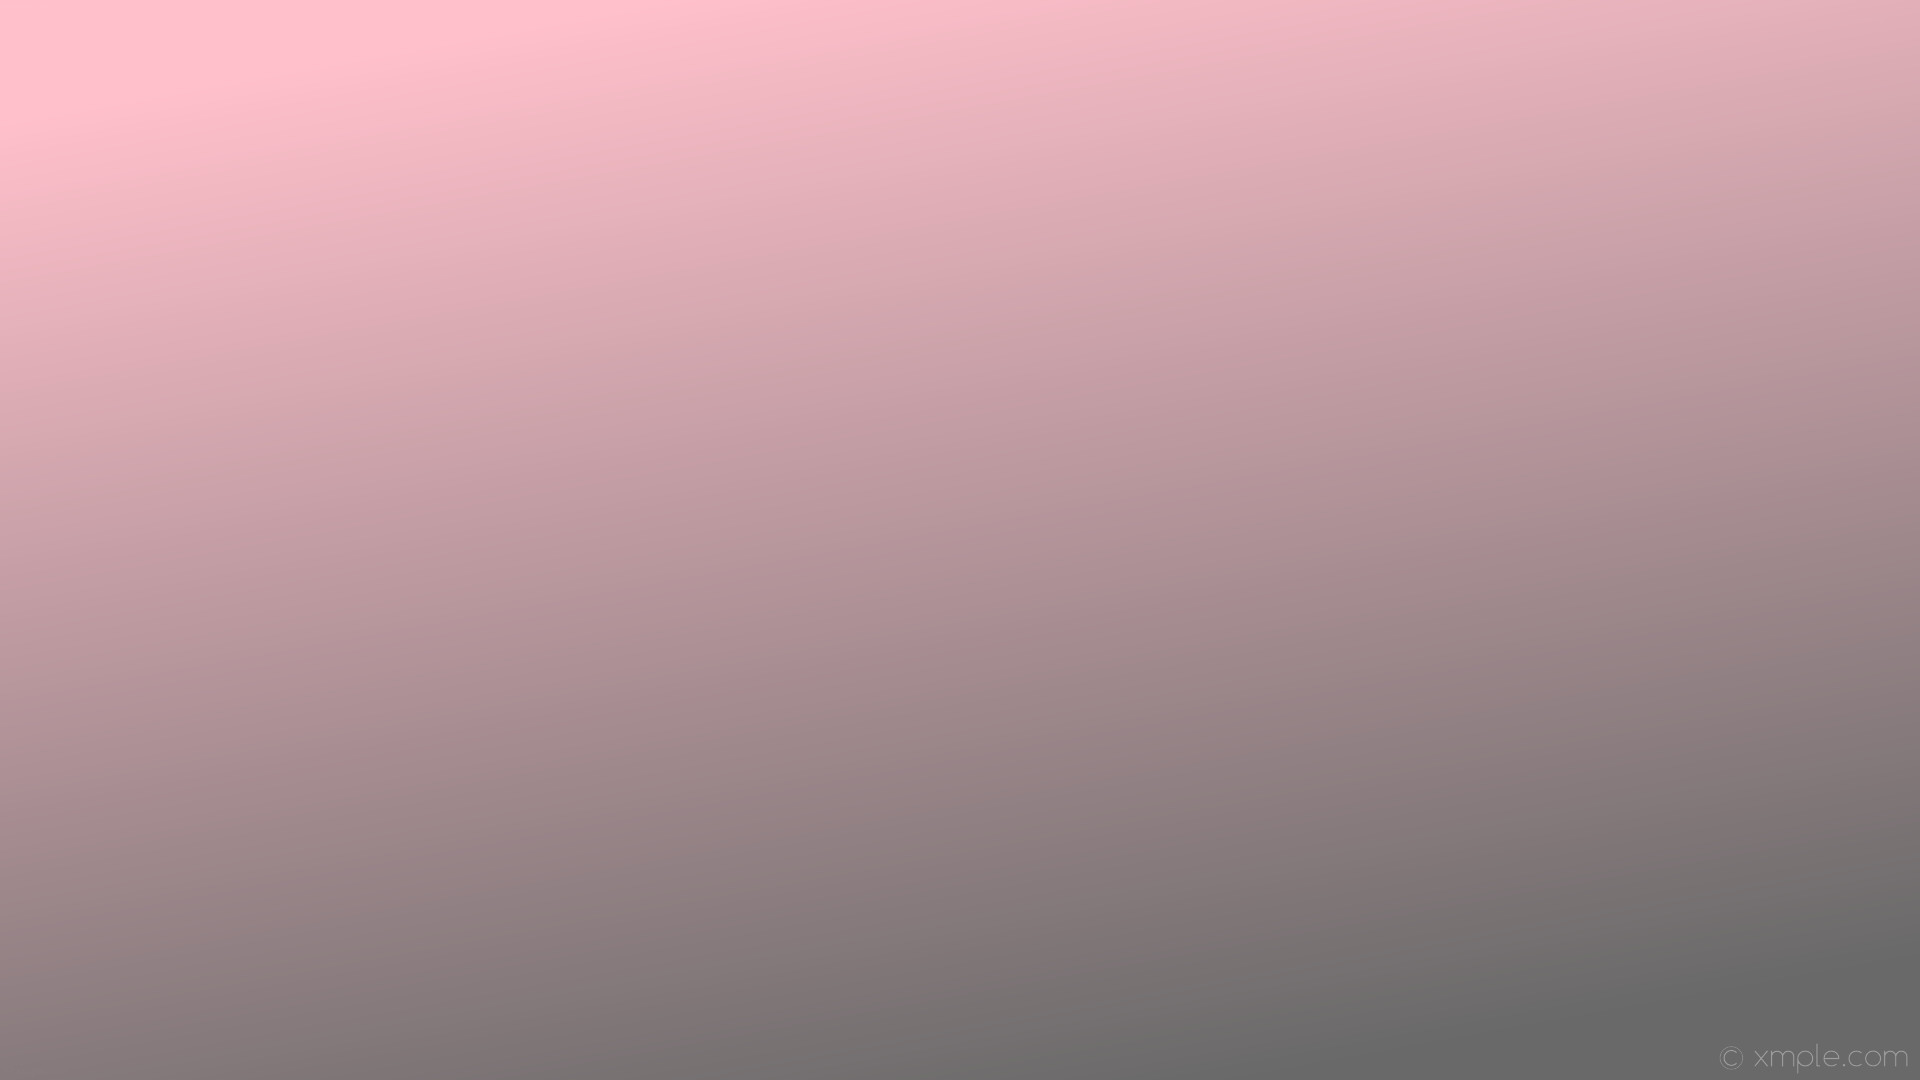 1920x1080 wallpaper grey pink linear gradient dim gray #ffc0cb #696969 120Â°